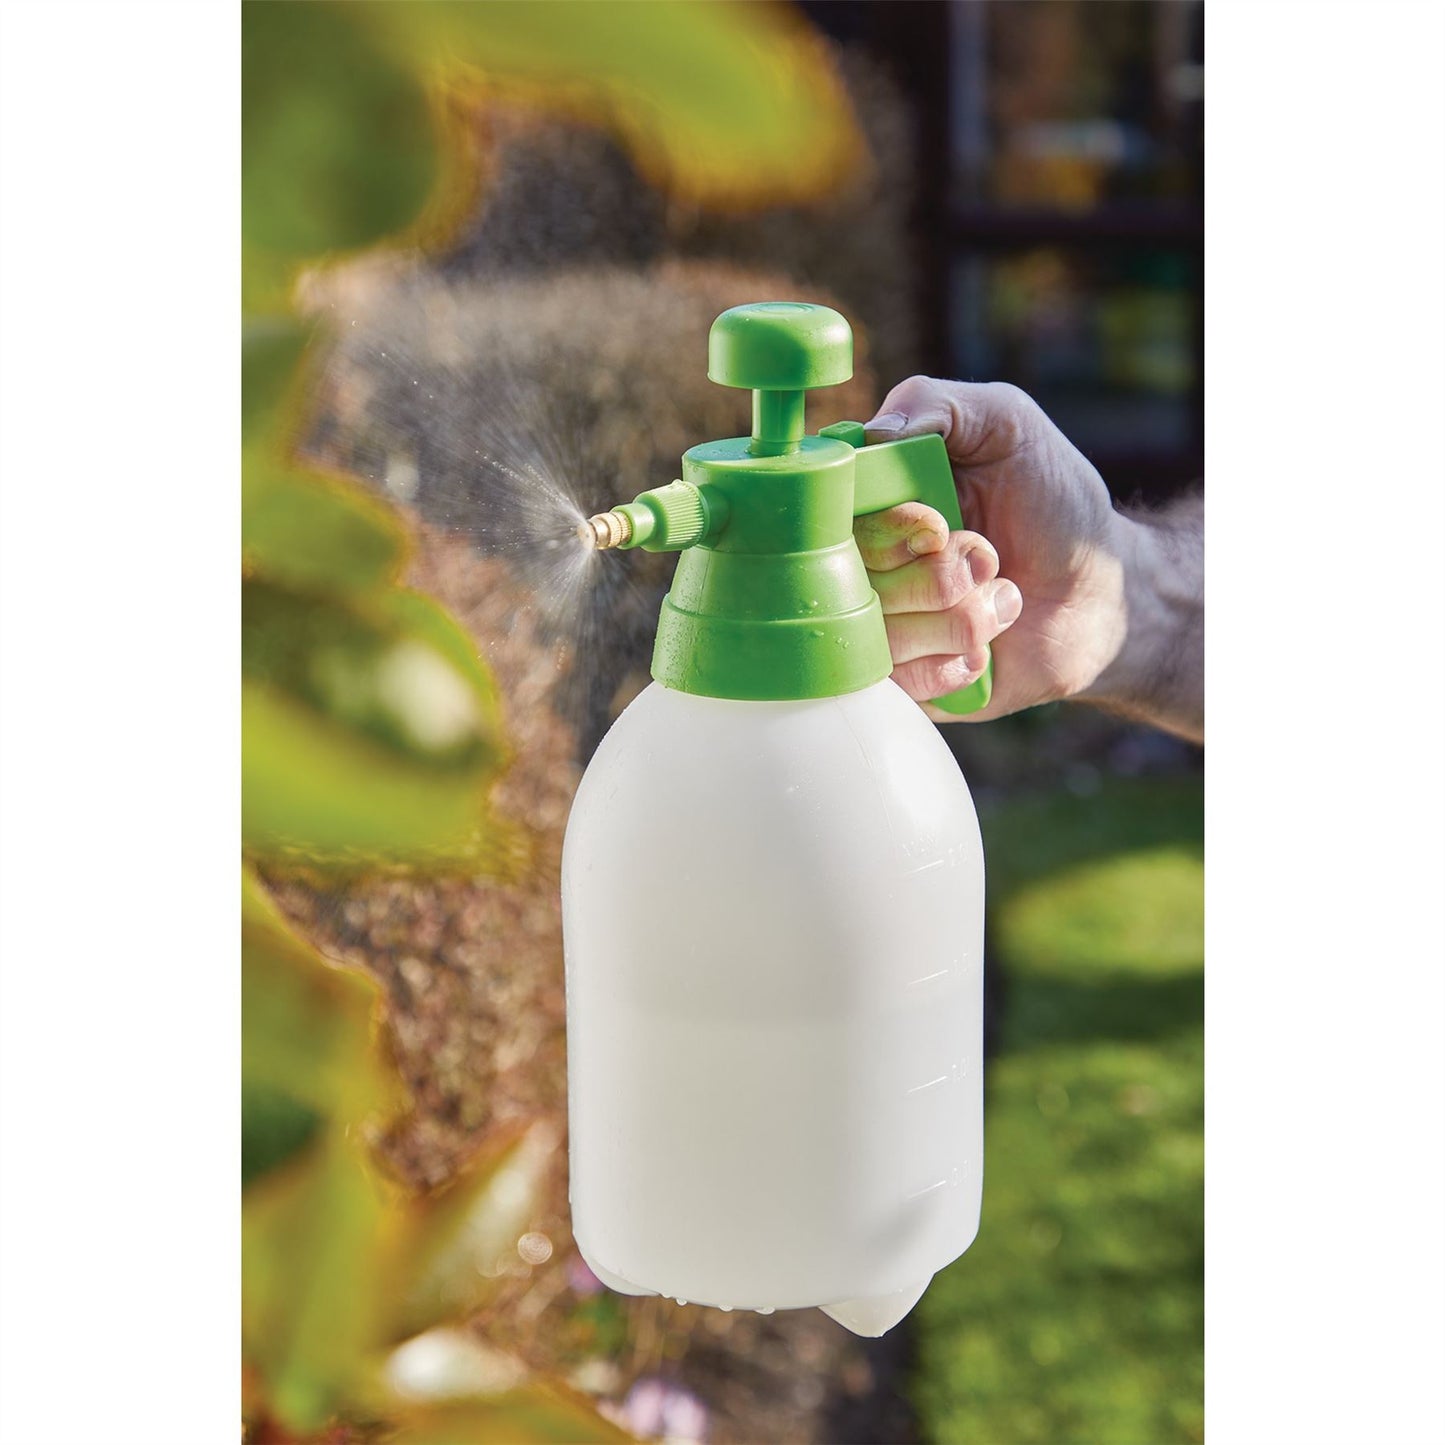 Draper 2.5 Litre Hand Pump Action Water,Weed Killer Pressure Spray/Sprayer,82467